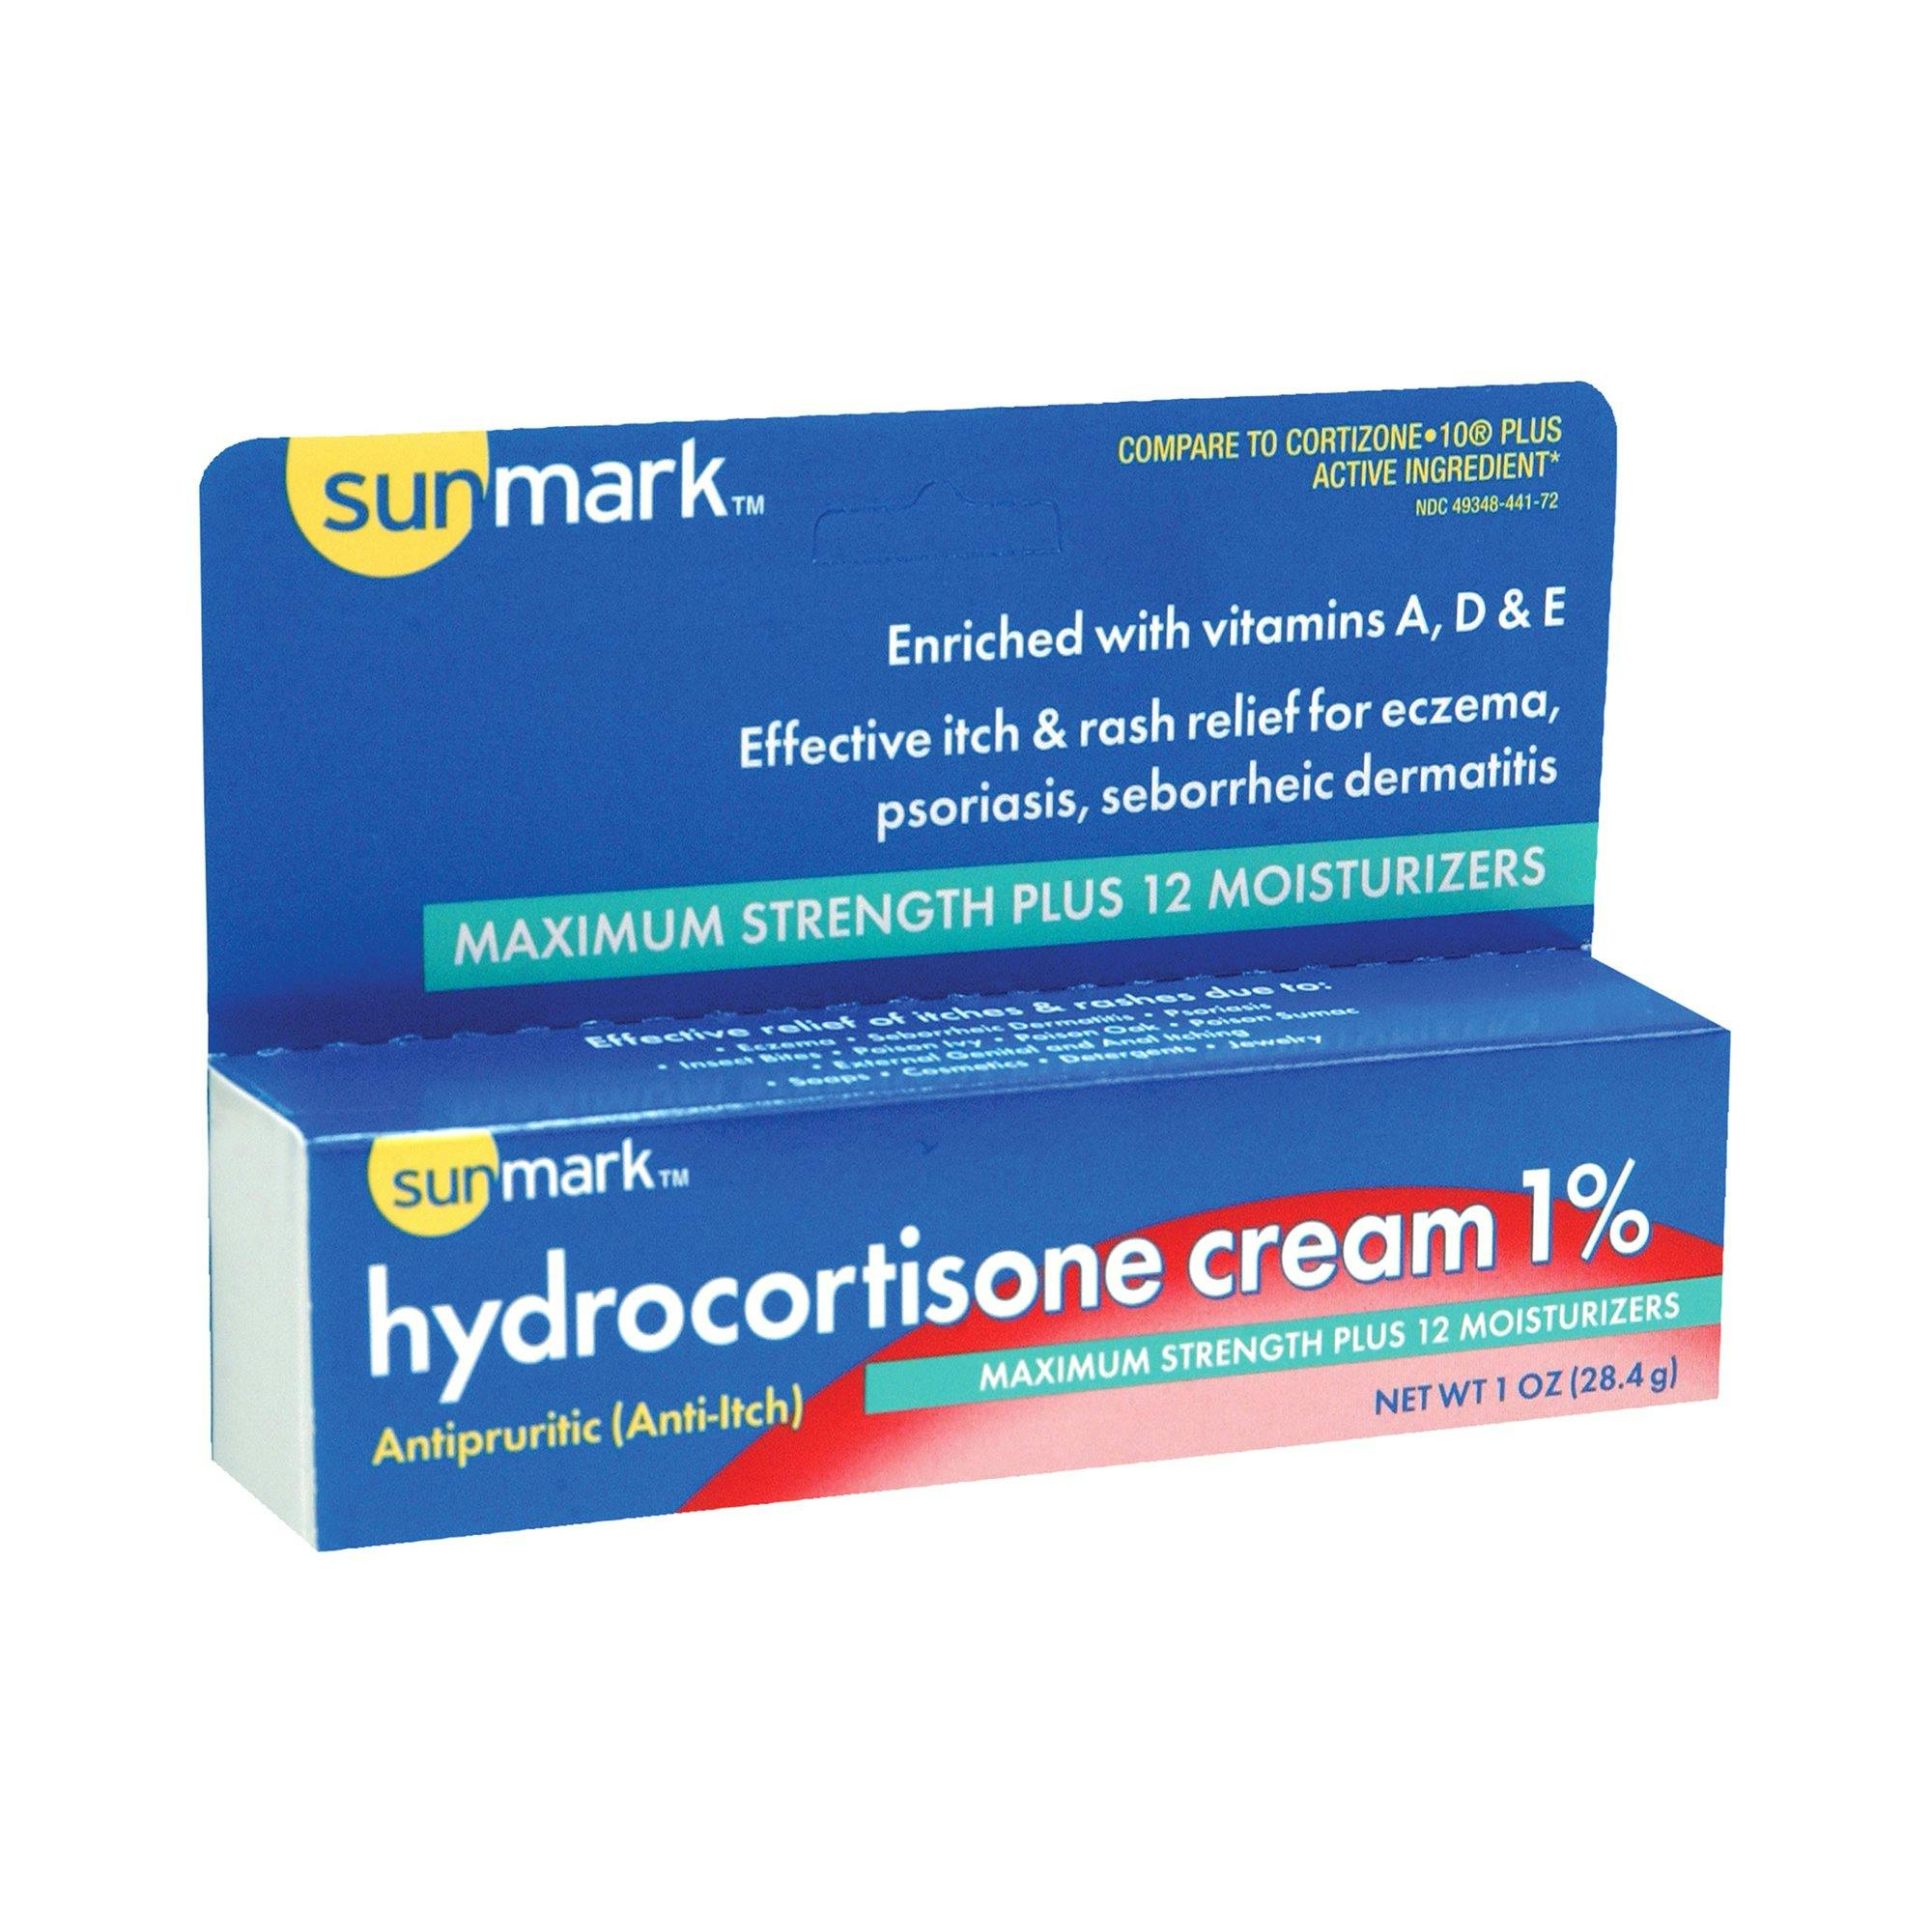 sunmark Hydrocortisone Cream, 1% Maximum Strength, 49348044172, 1 Each